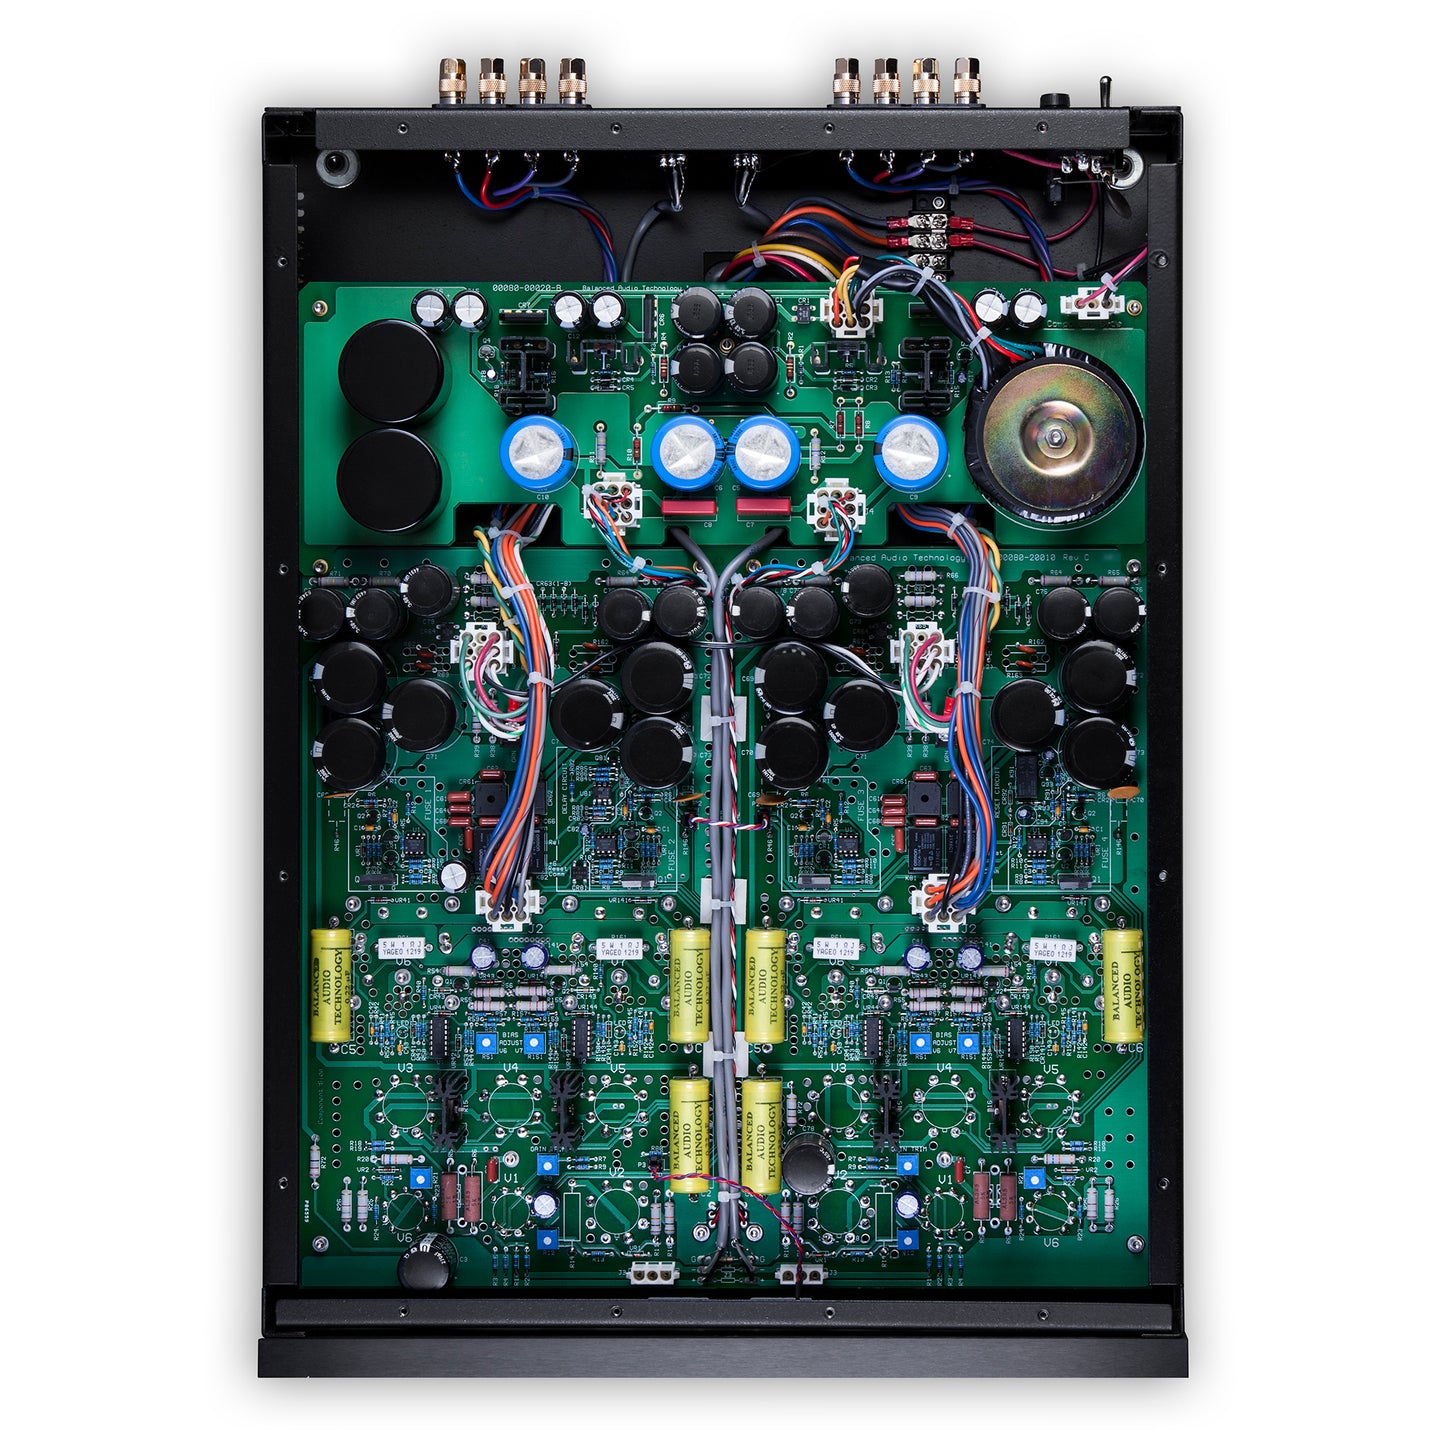 Balanced Audio Technology REX II Monoblock Power Amplifiers - Pair (OPEN)